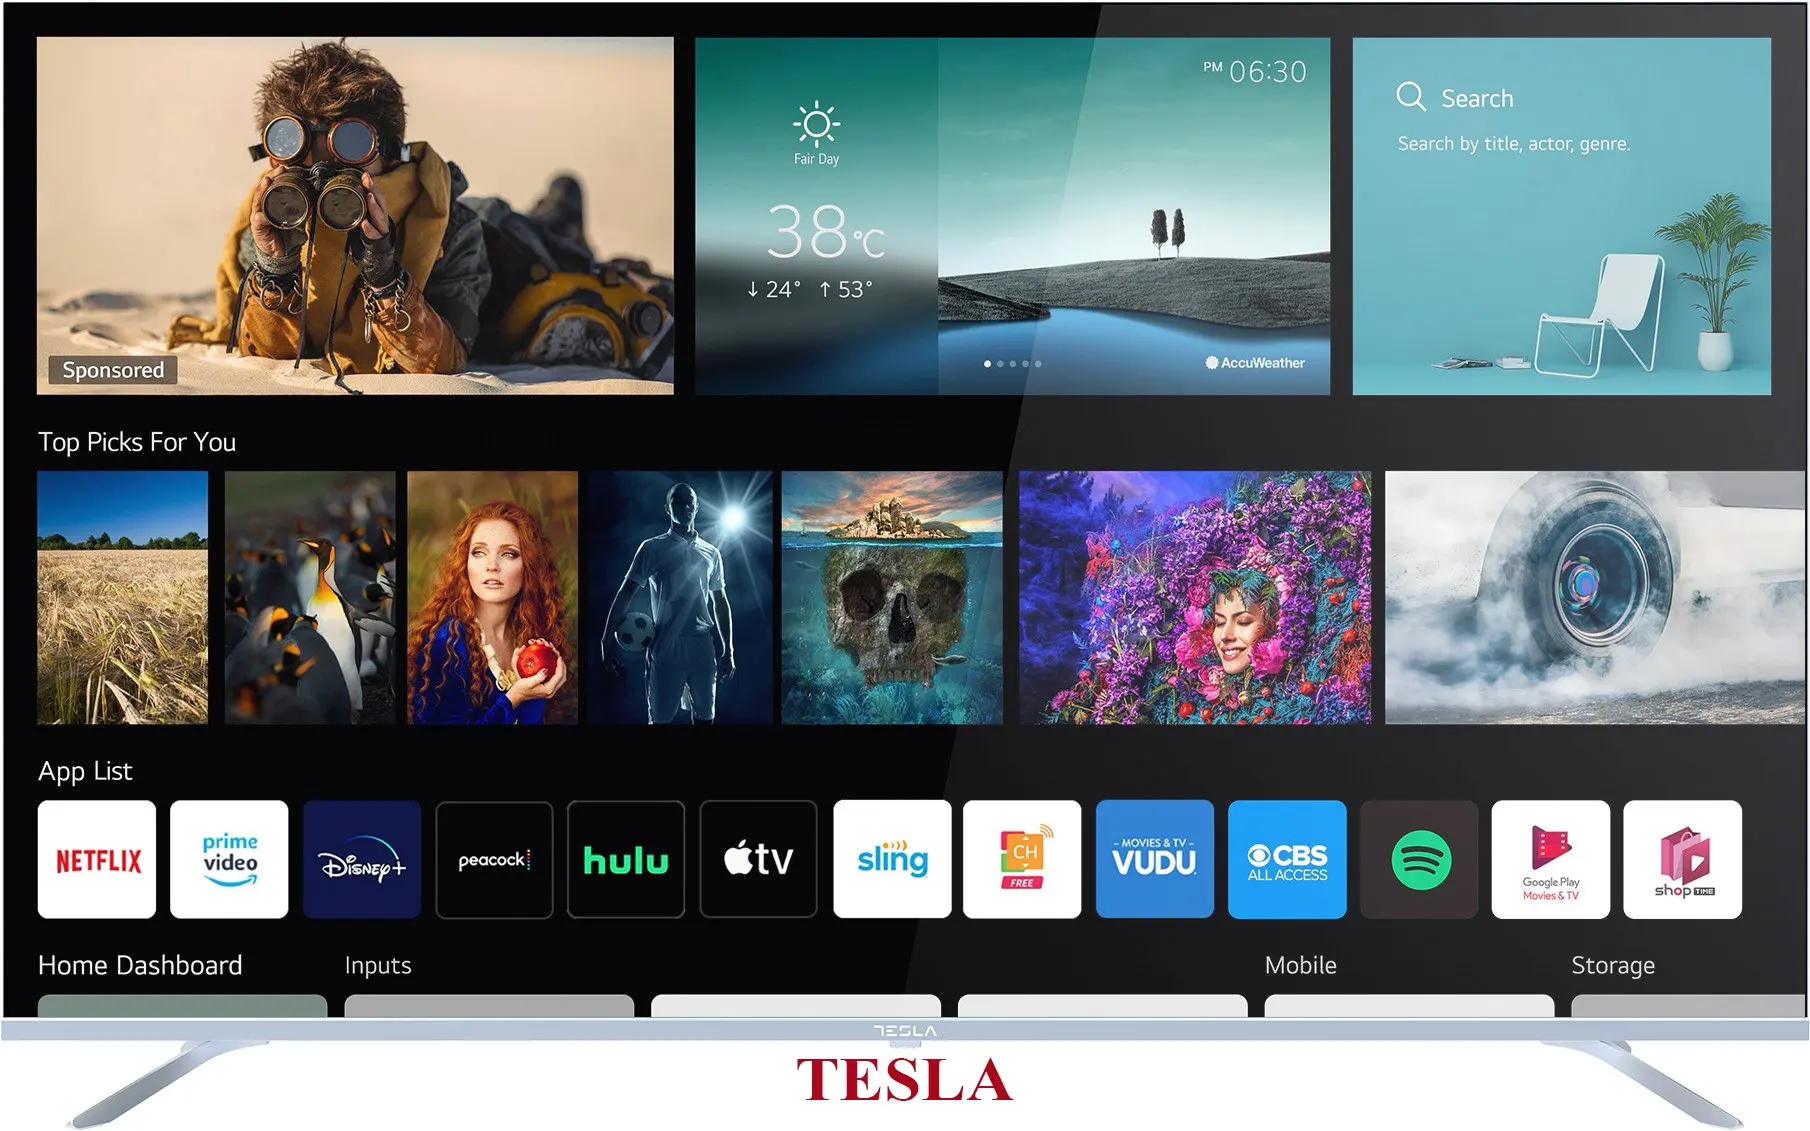 Who makes Tesla TVs